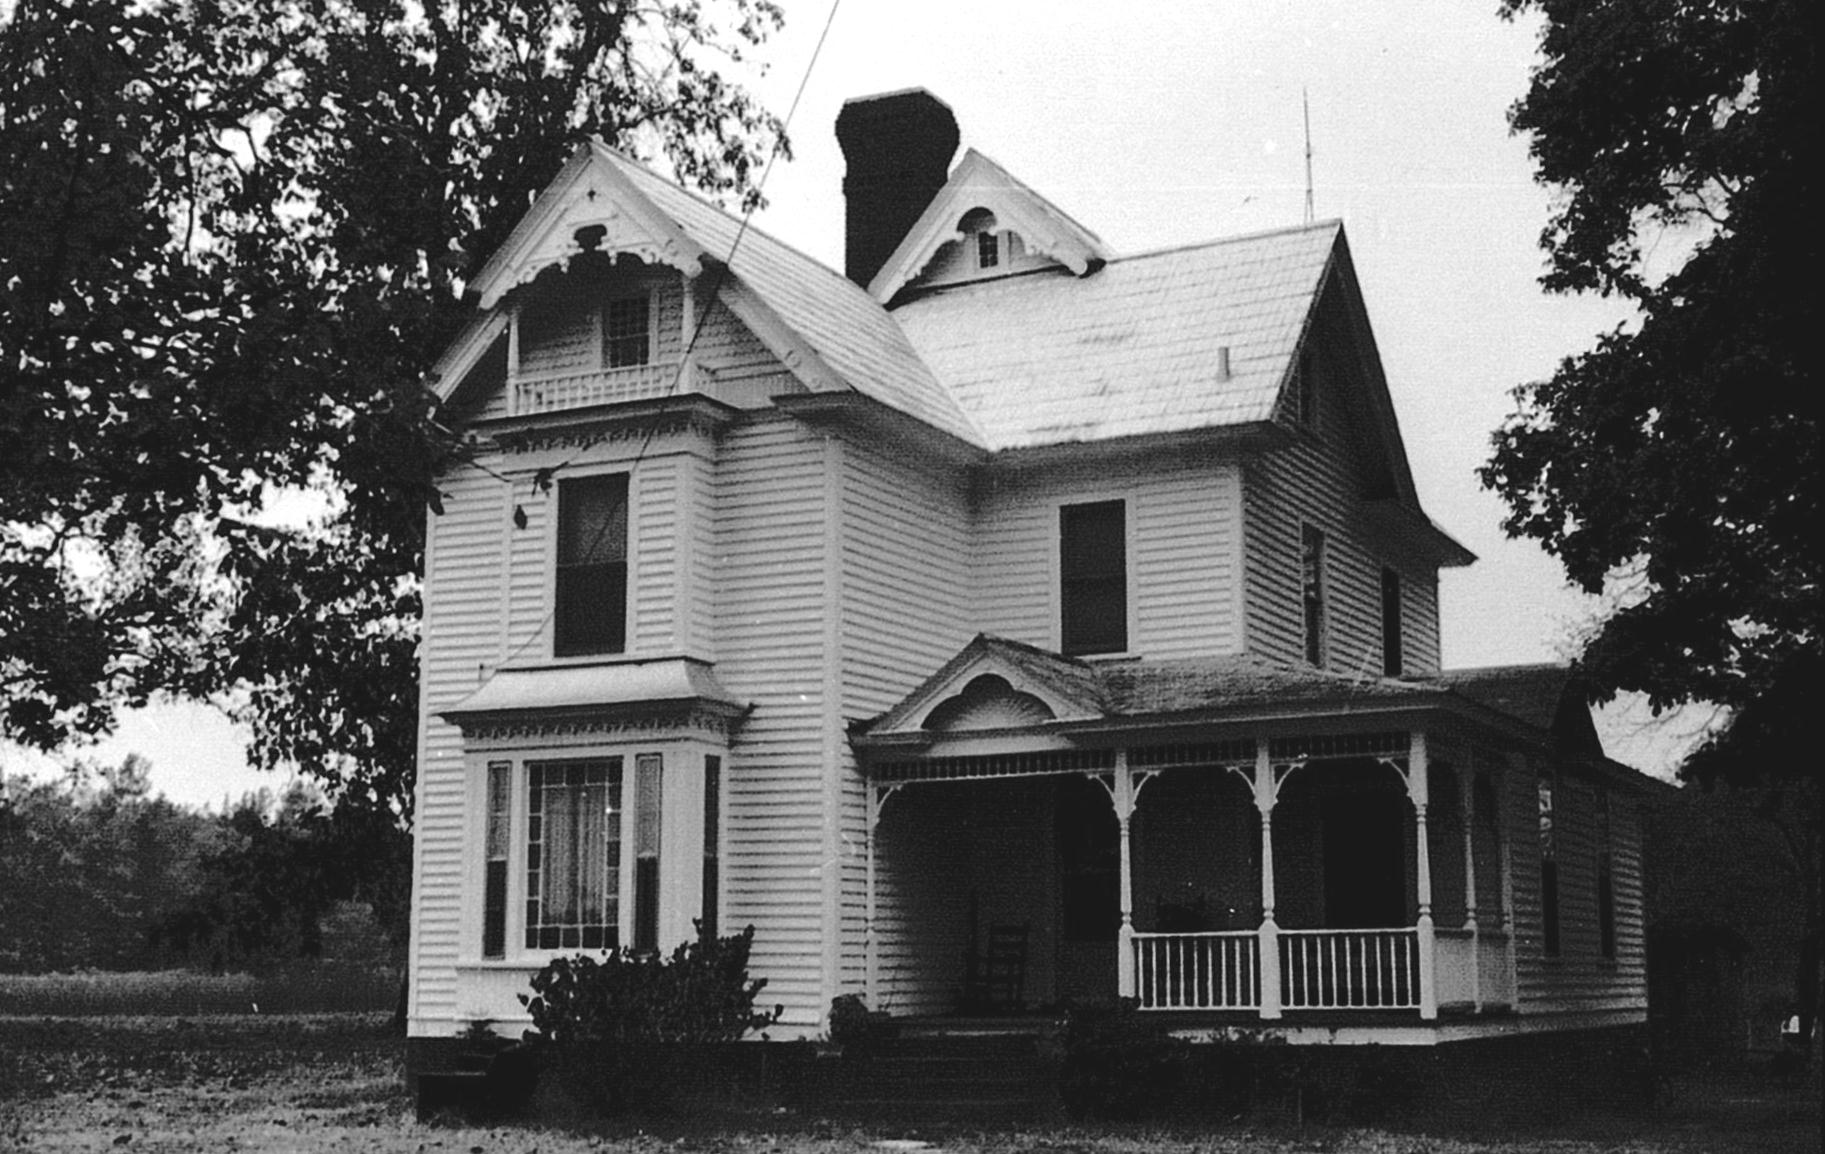 Kernodle-Pickett House